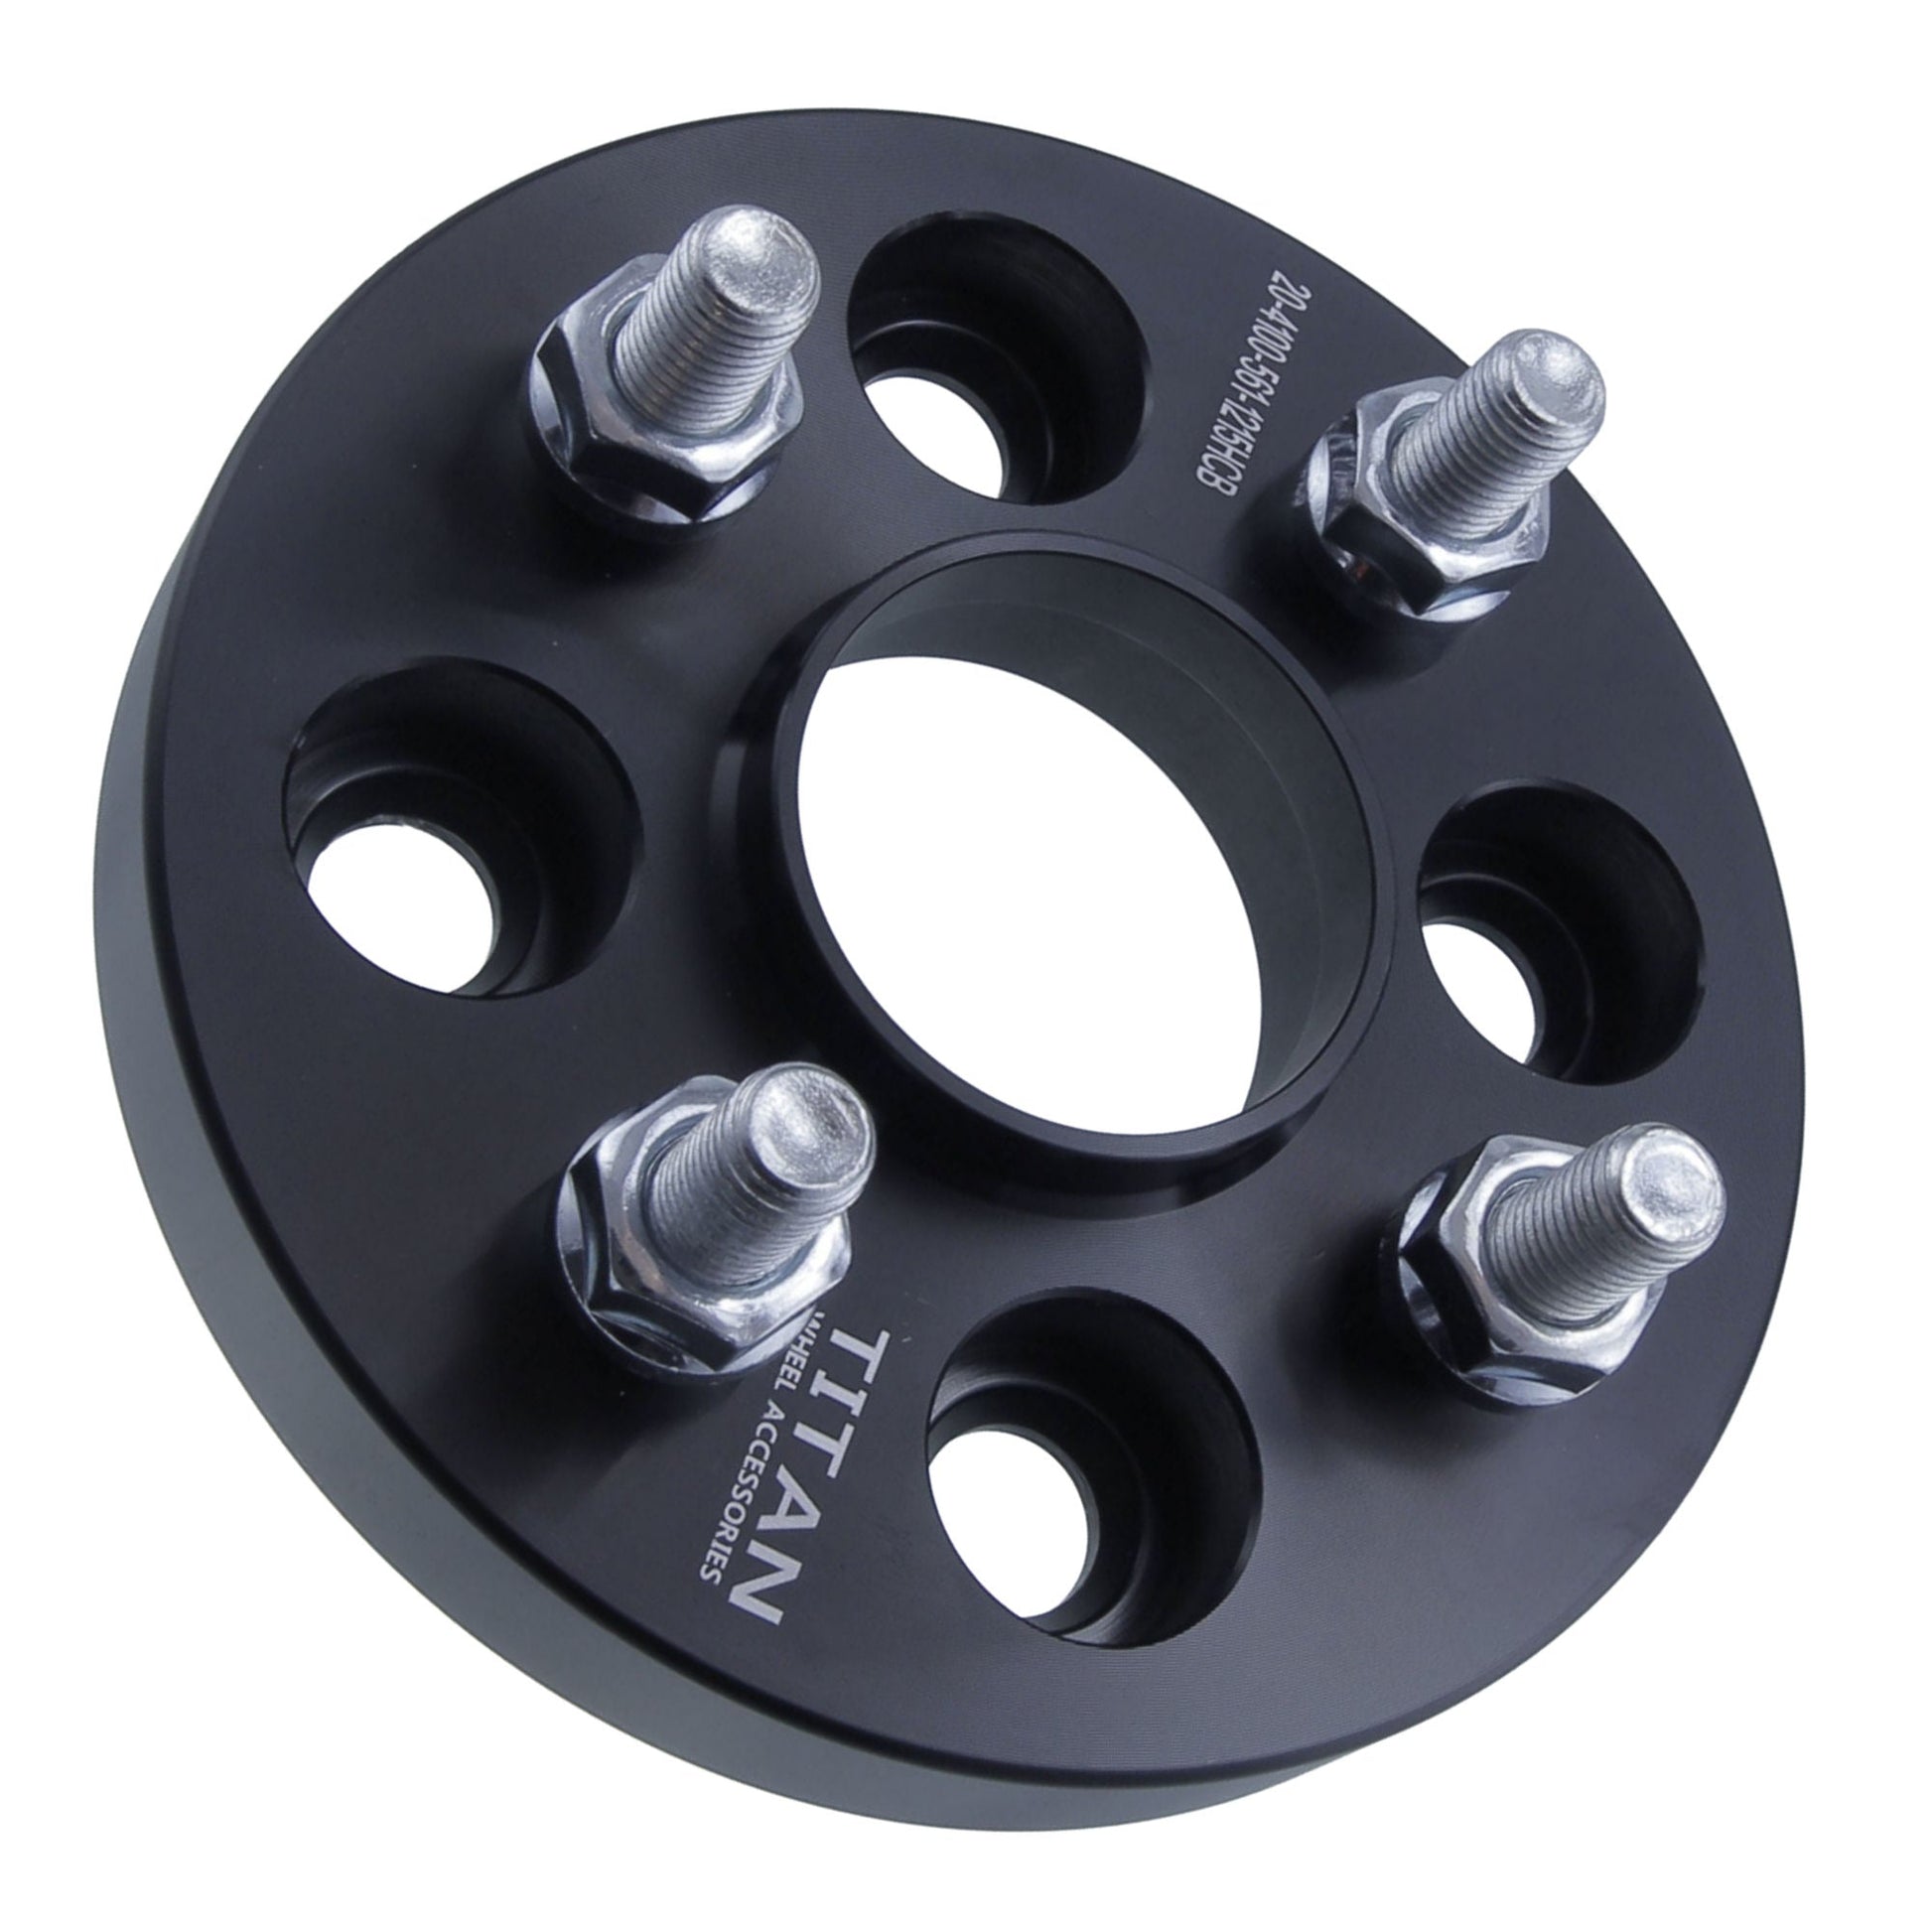 20mm Titan Wheel Spacers for Honda EF EG EK EP Civic | 4x100 | 56.1 Hubcentric |12x1.5 Studs | Titan Wheel Accessories